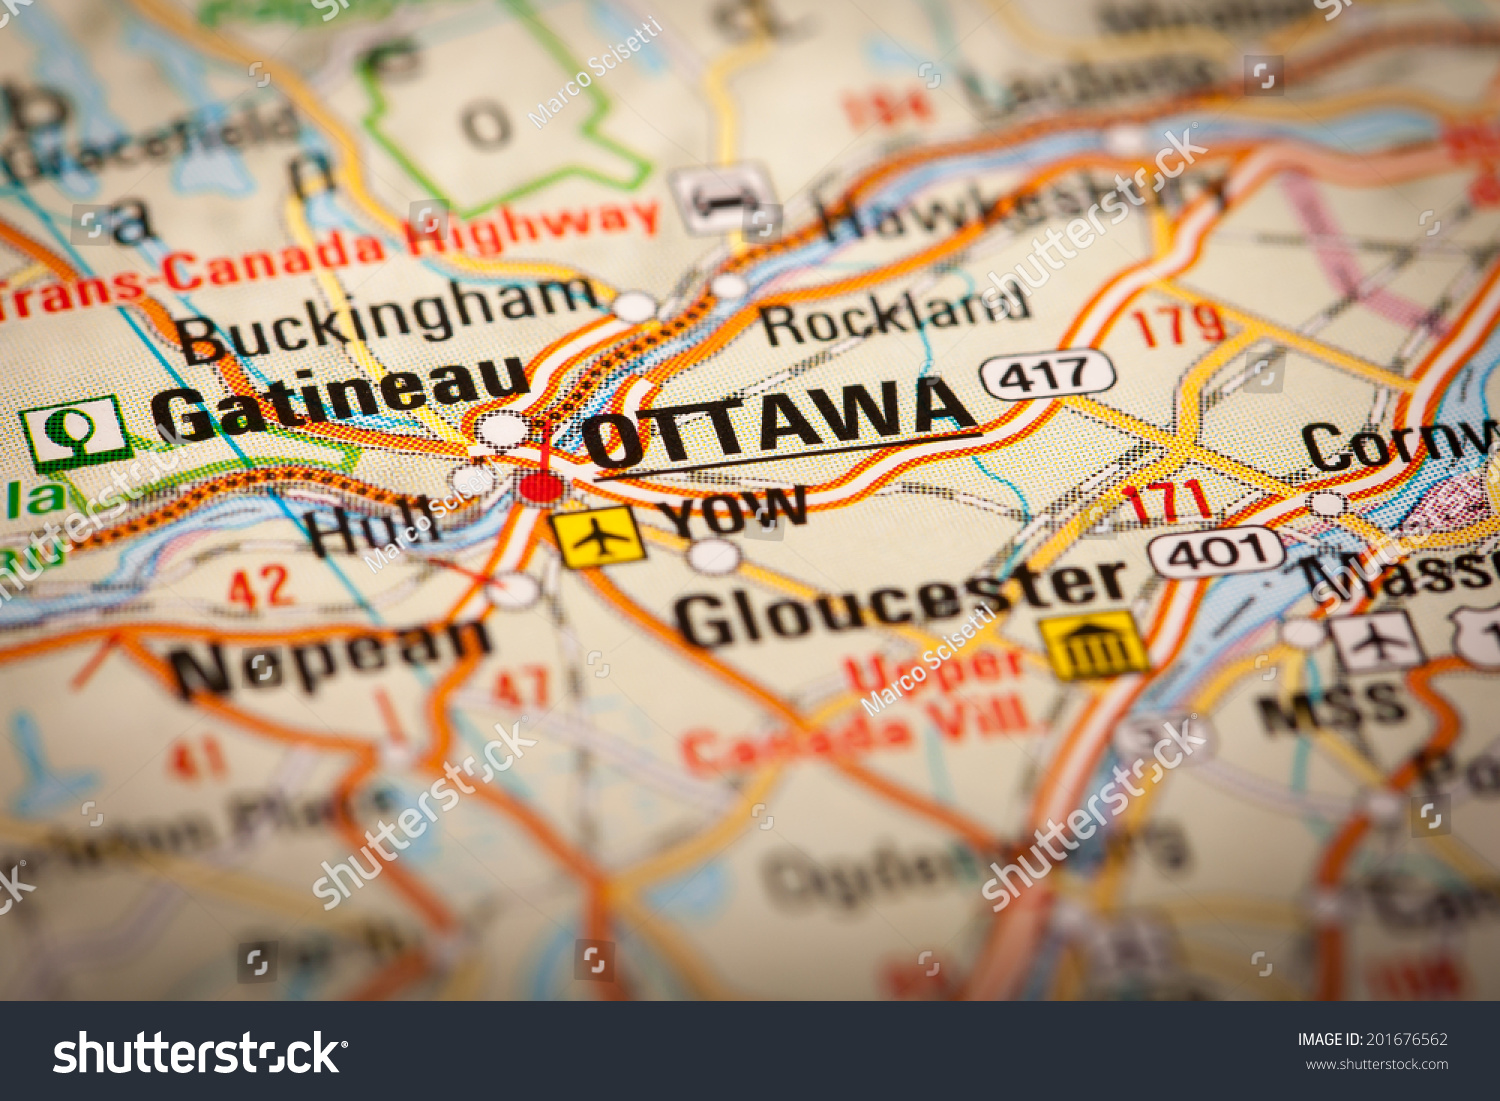 Stock Photo Map Photography Ottawa City On A Road Map 201676562 